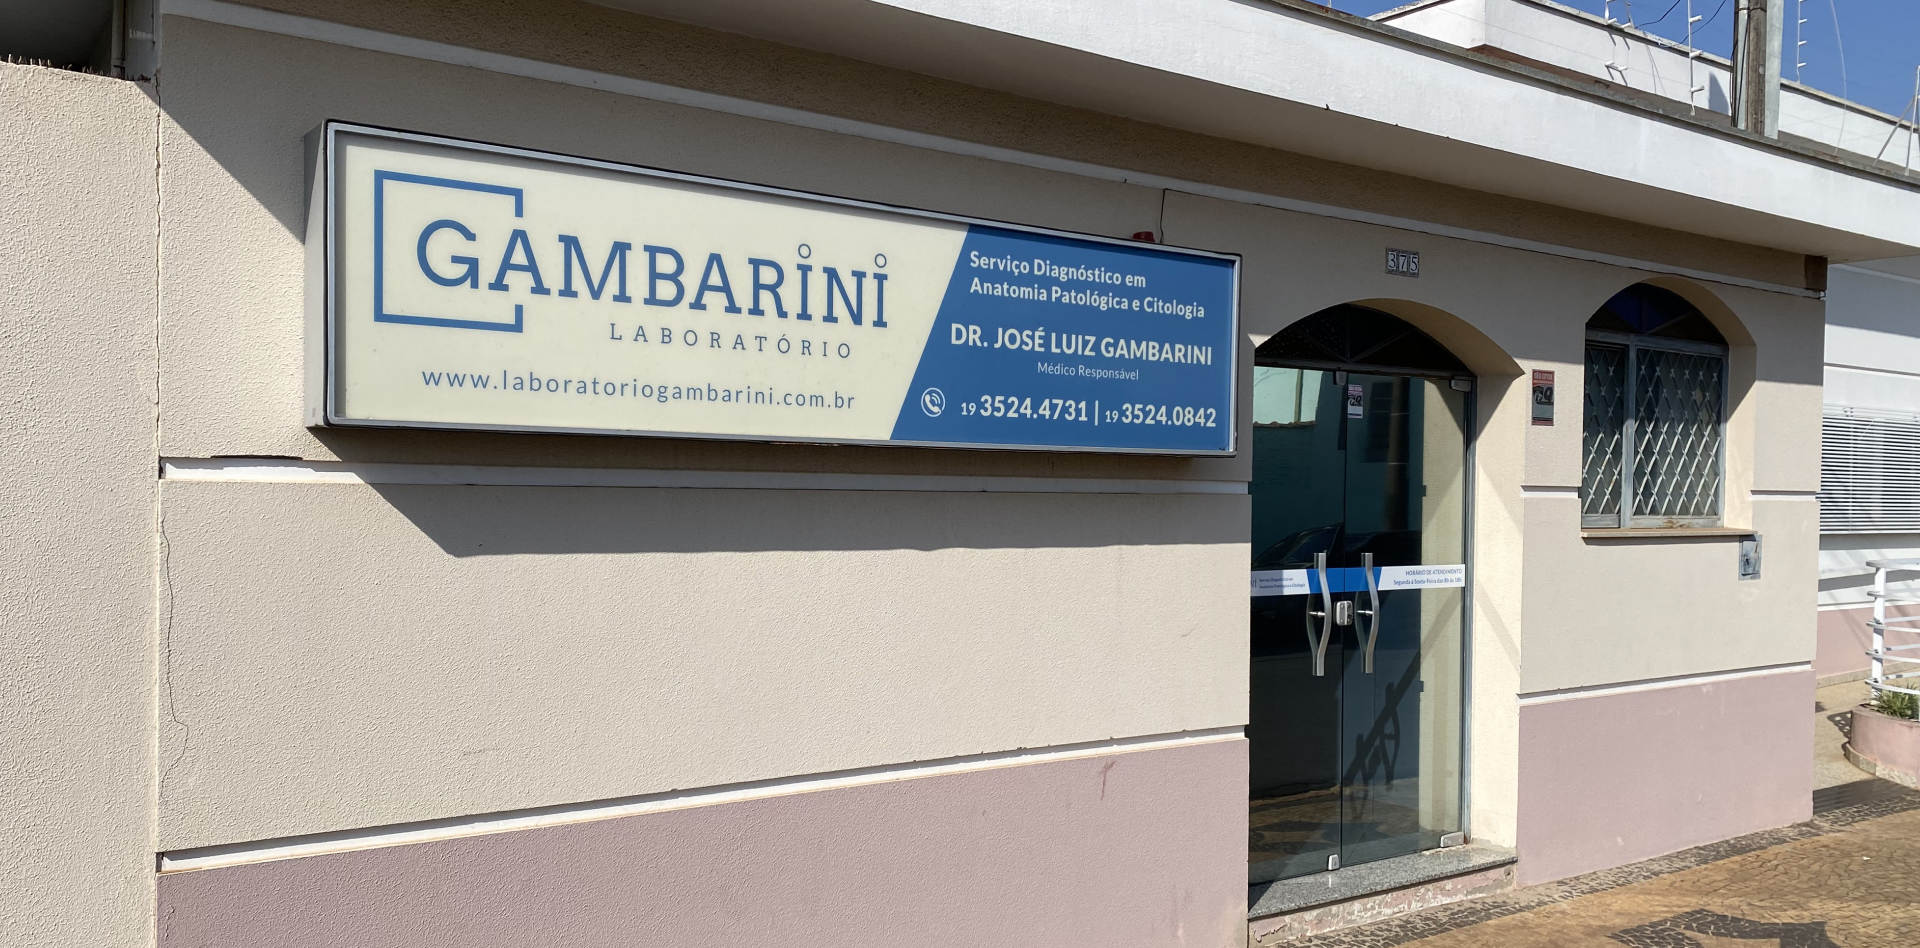 Laboratório Gambarini - Sede